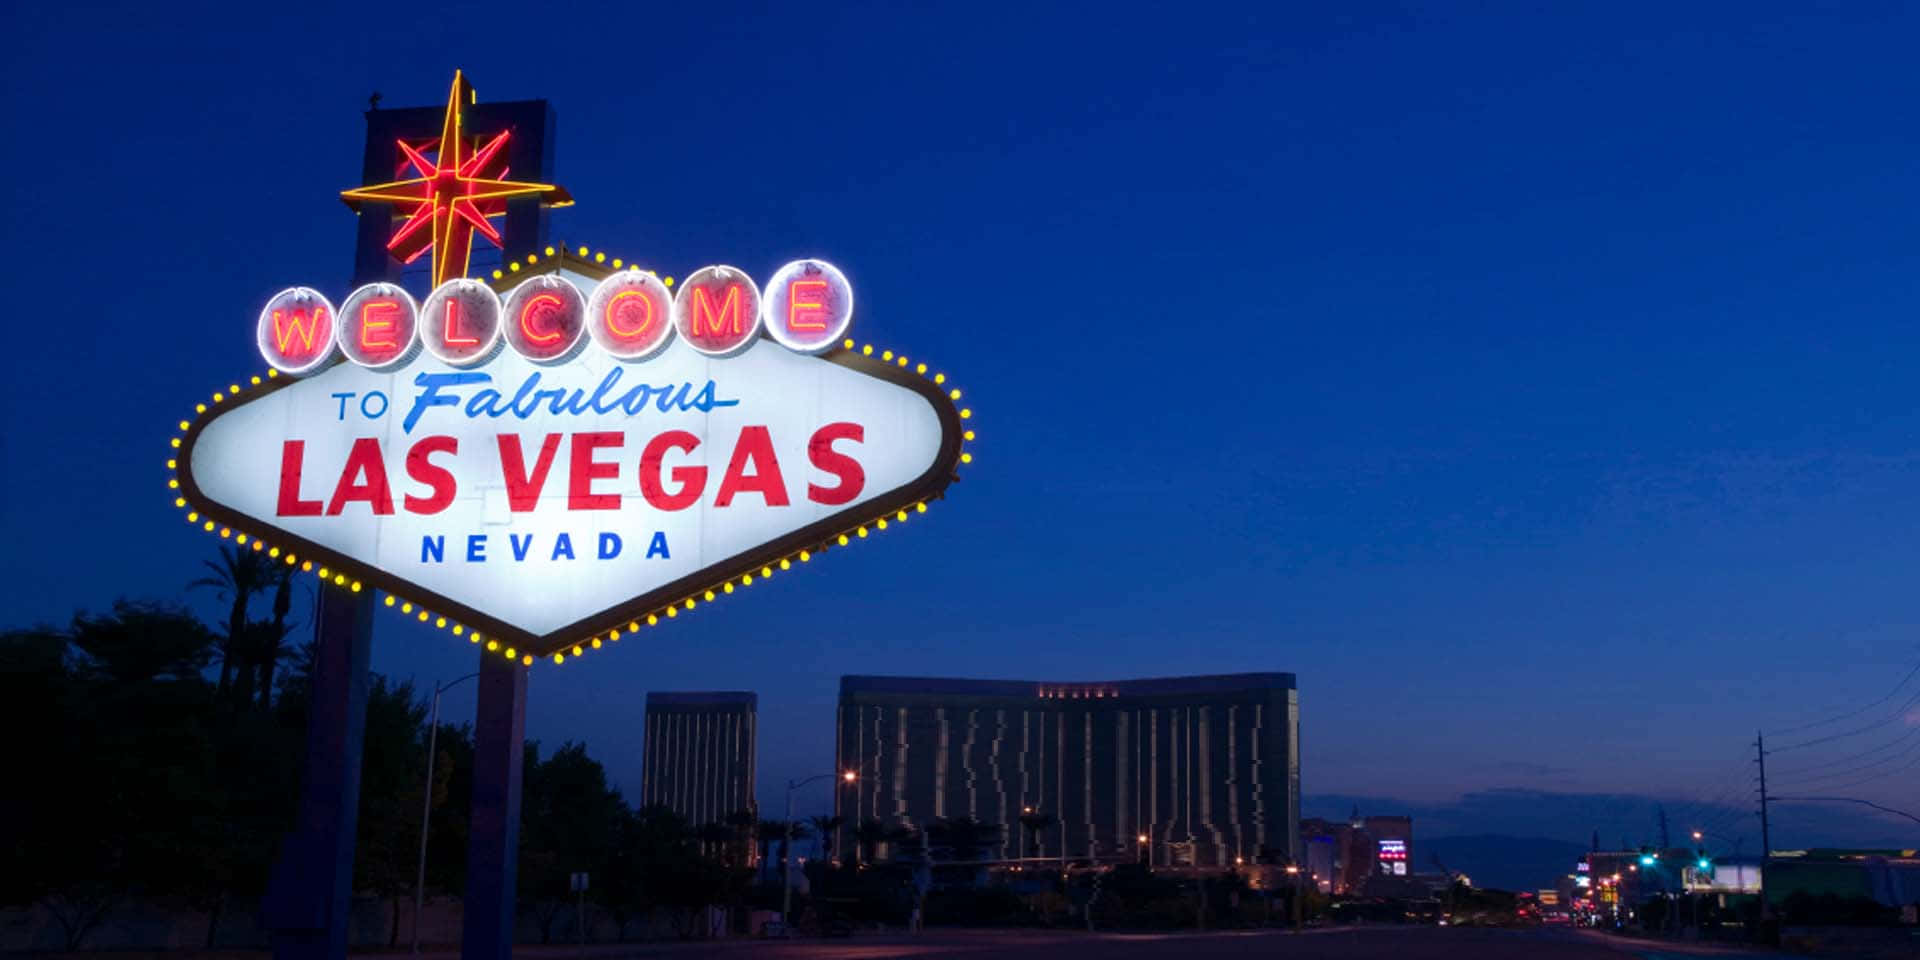 Download Landscape Las Vegas Background At Night